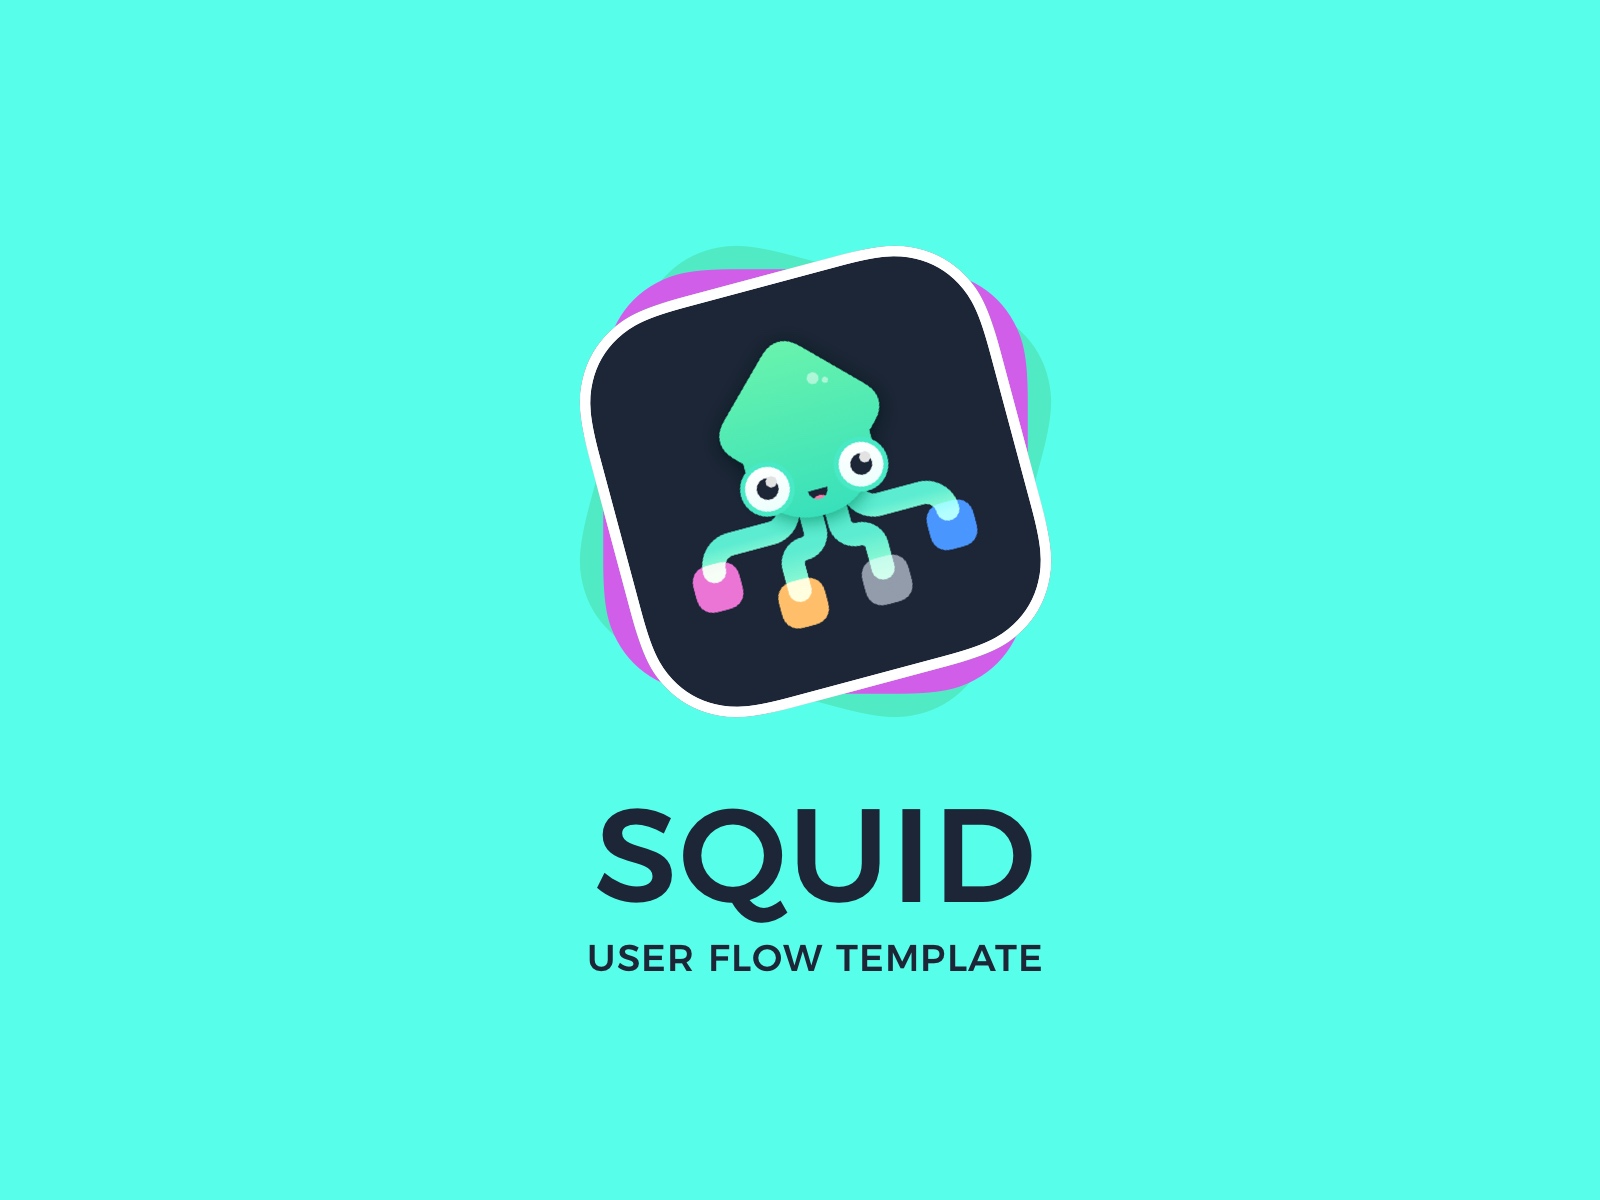 SQUID User Flow Template